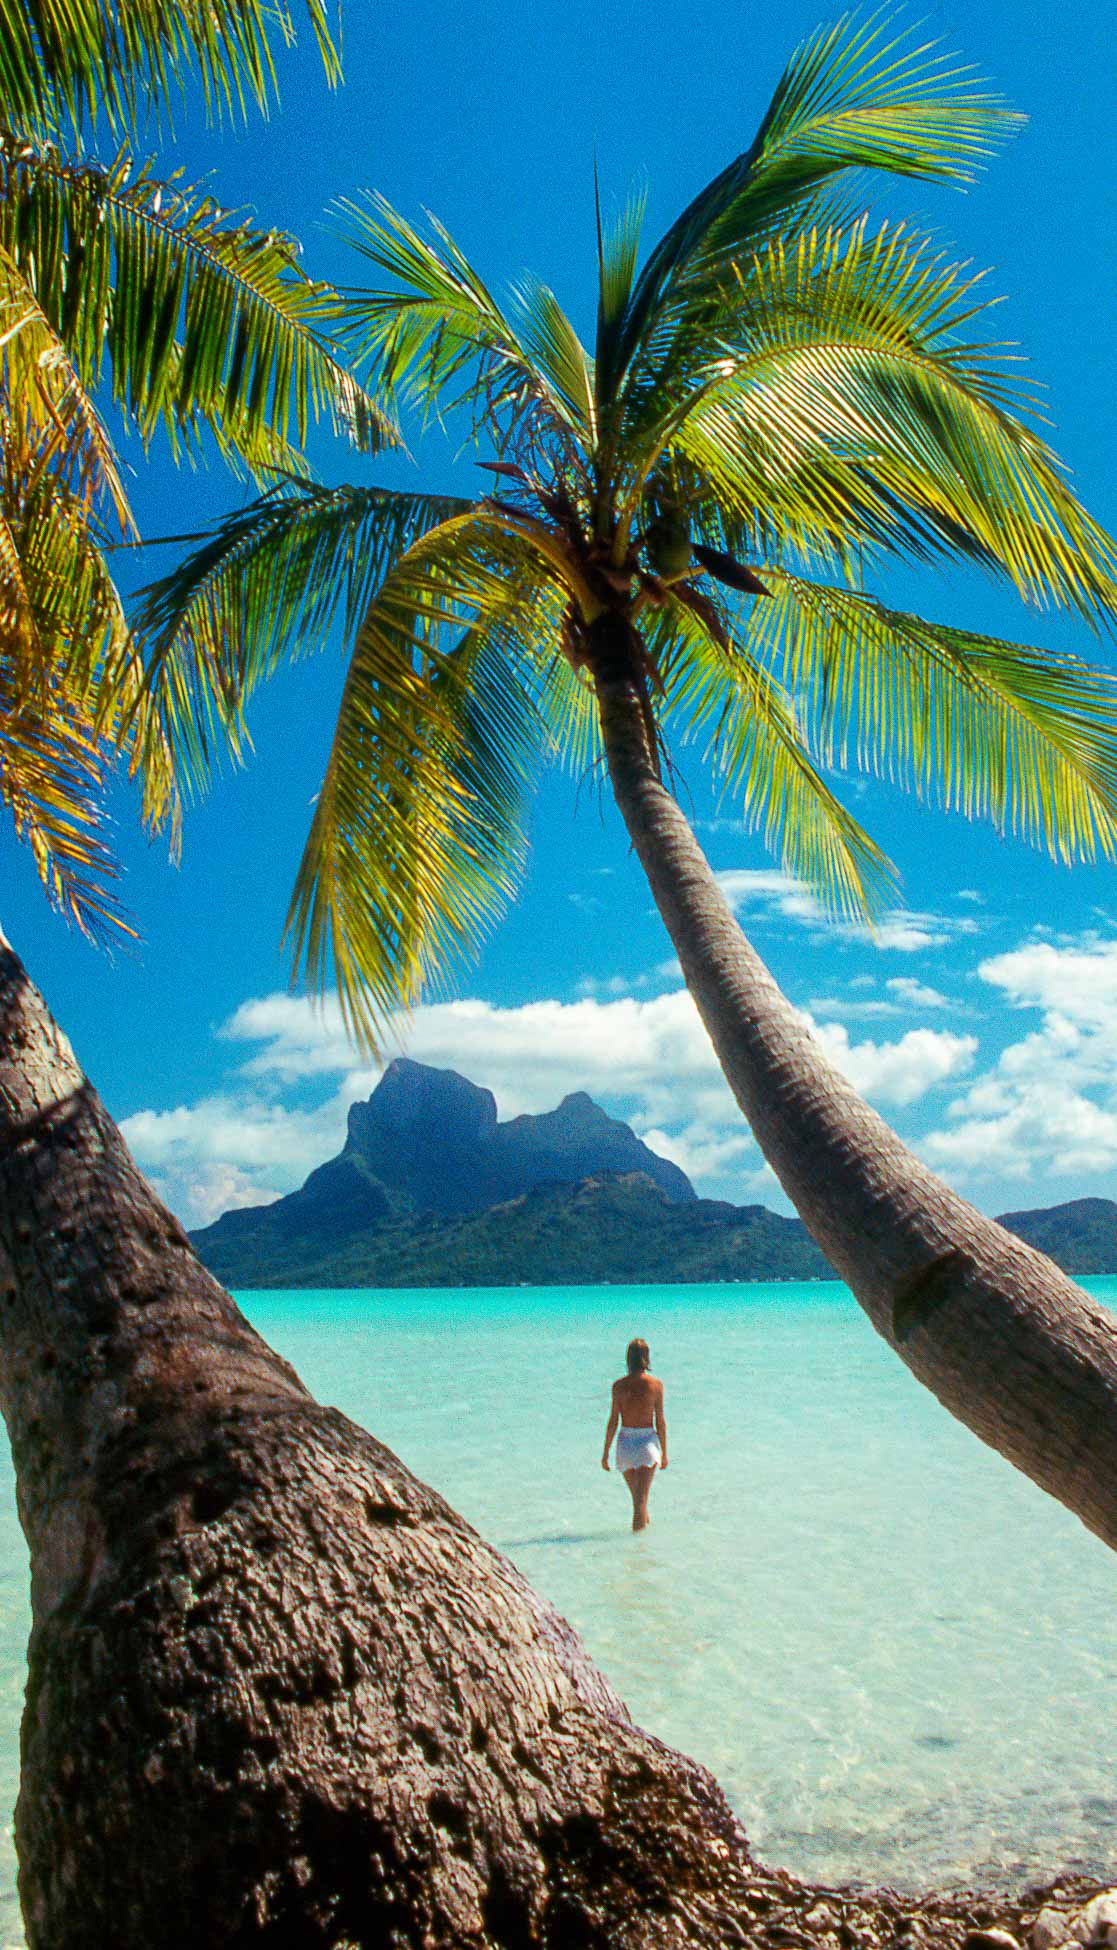 Palm trees and woman walking in the lagoon on the island of Bora Bora.